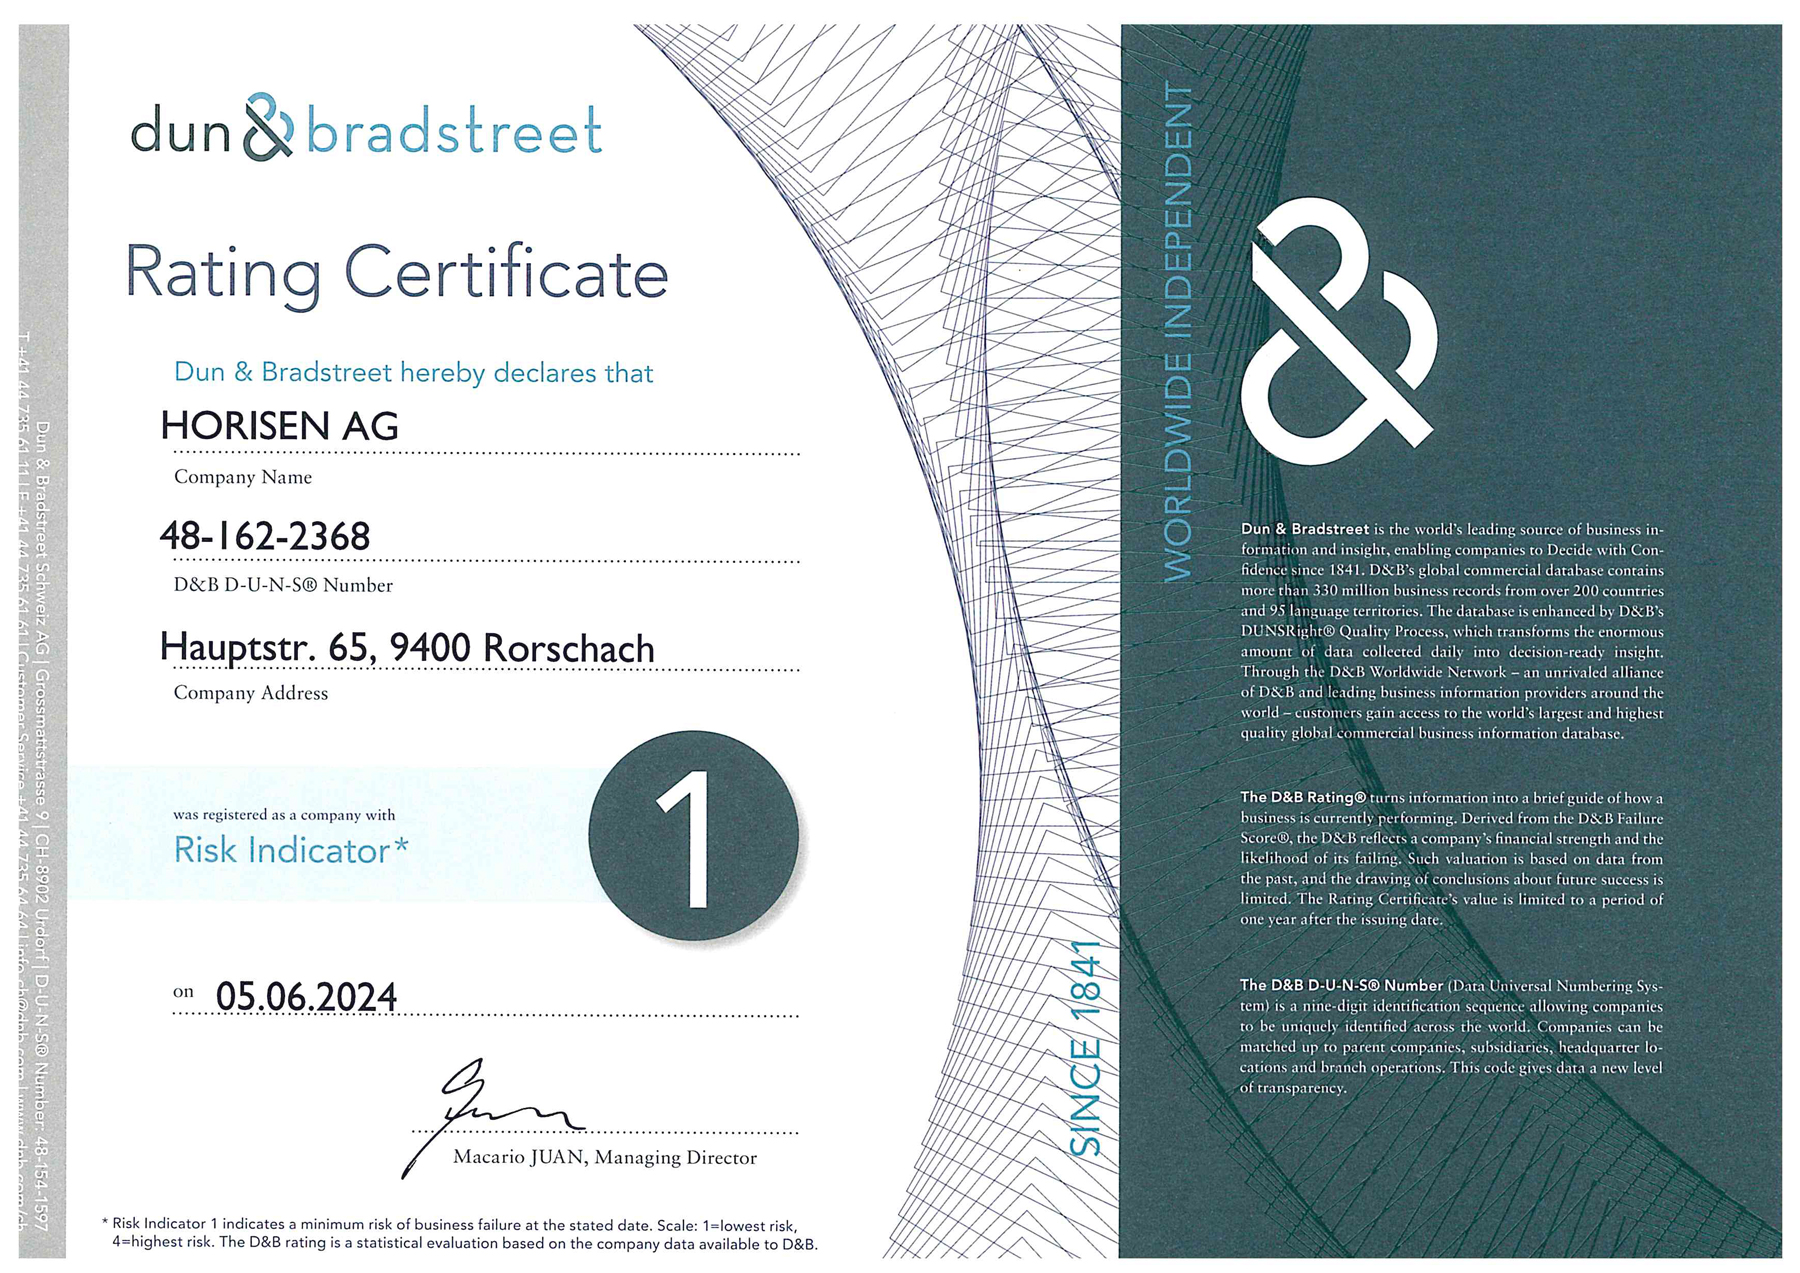 Rating Certificate from Dun & Bradstreet 2023